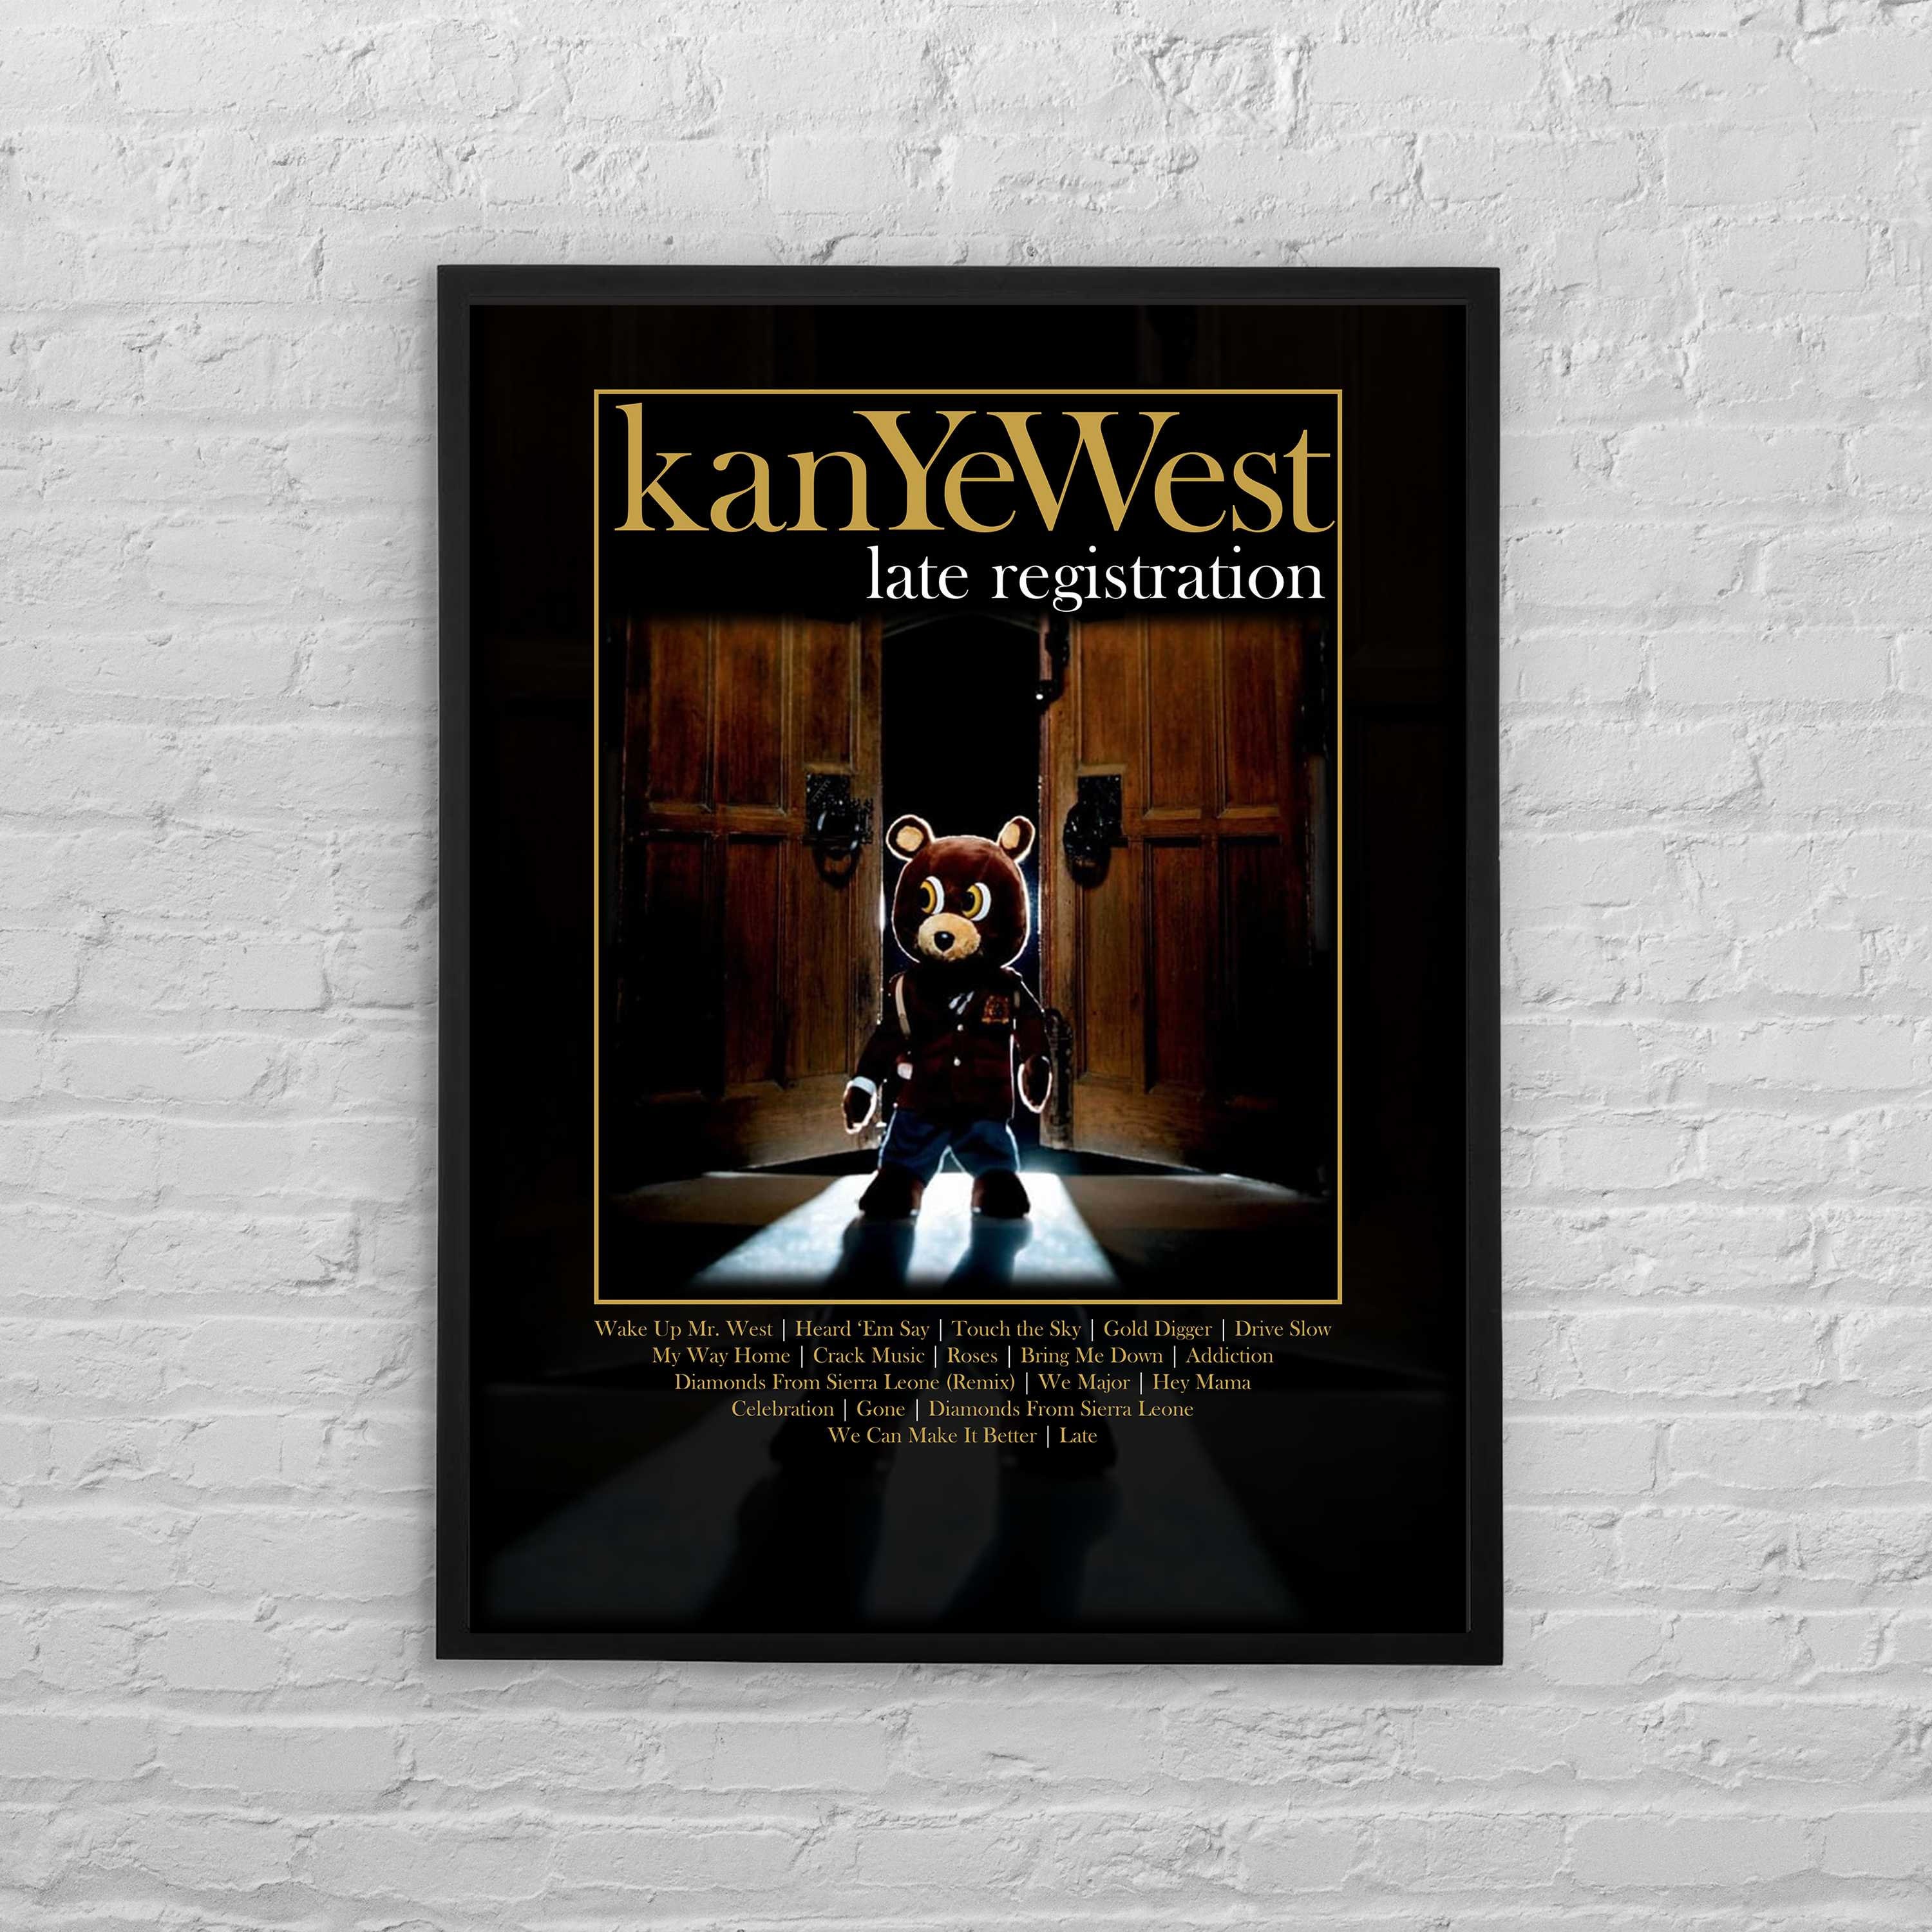 kanye west late registration album cover